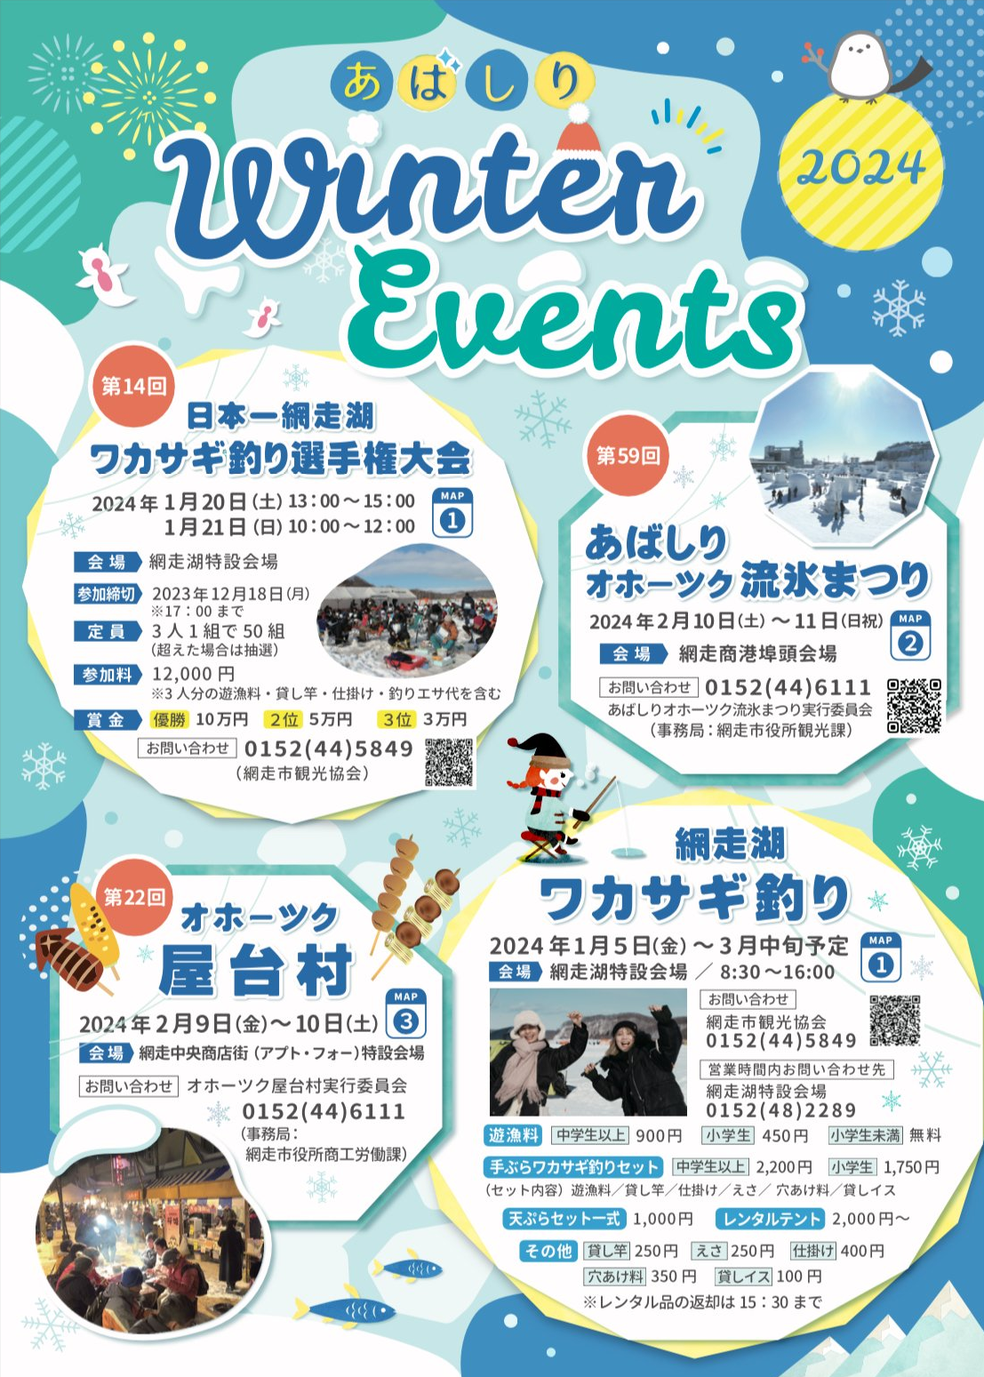 “2024 Abashion WINTER EVENTS”的通知!!